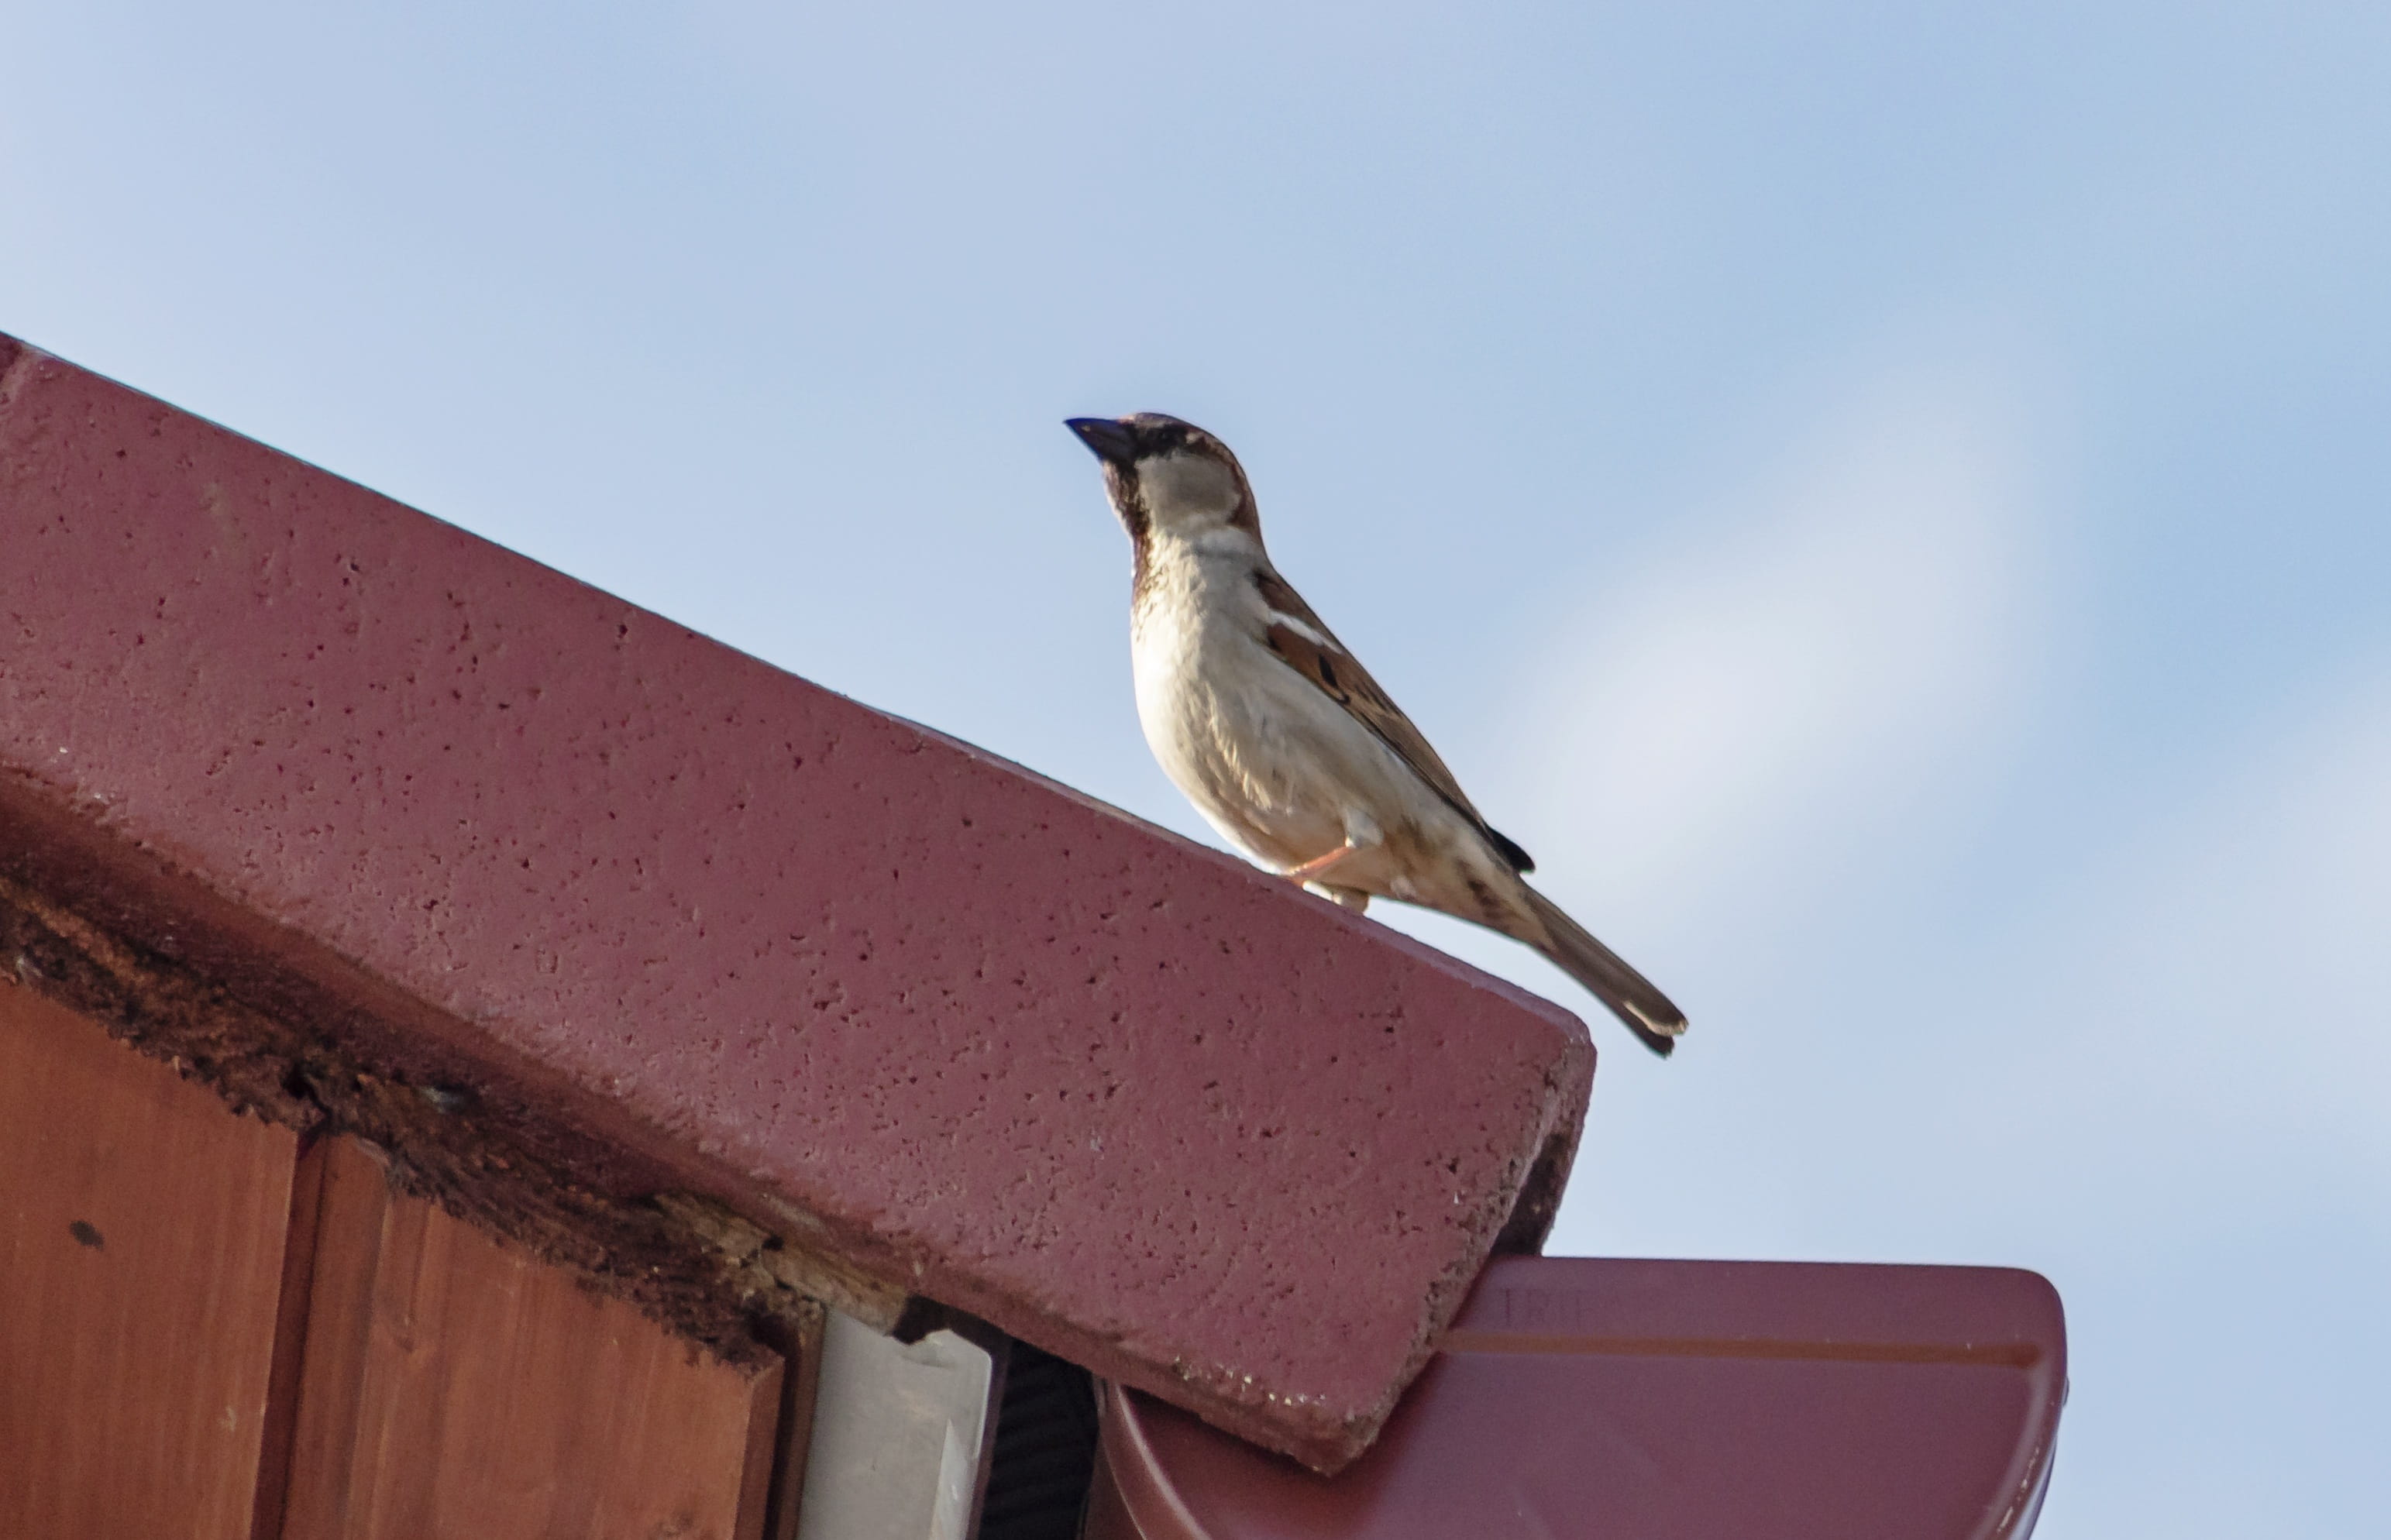 house sparrow, bird, bird species, small stature, feather, animal